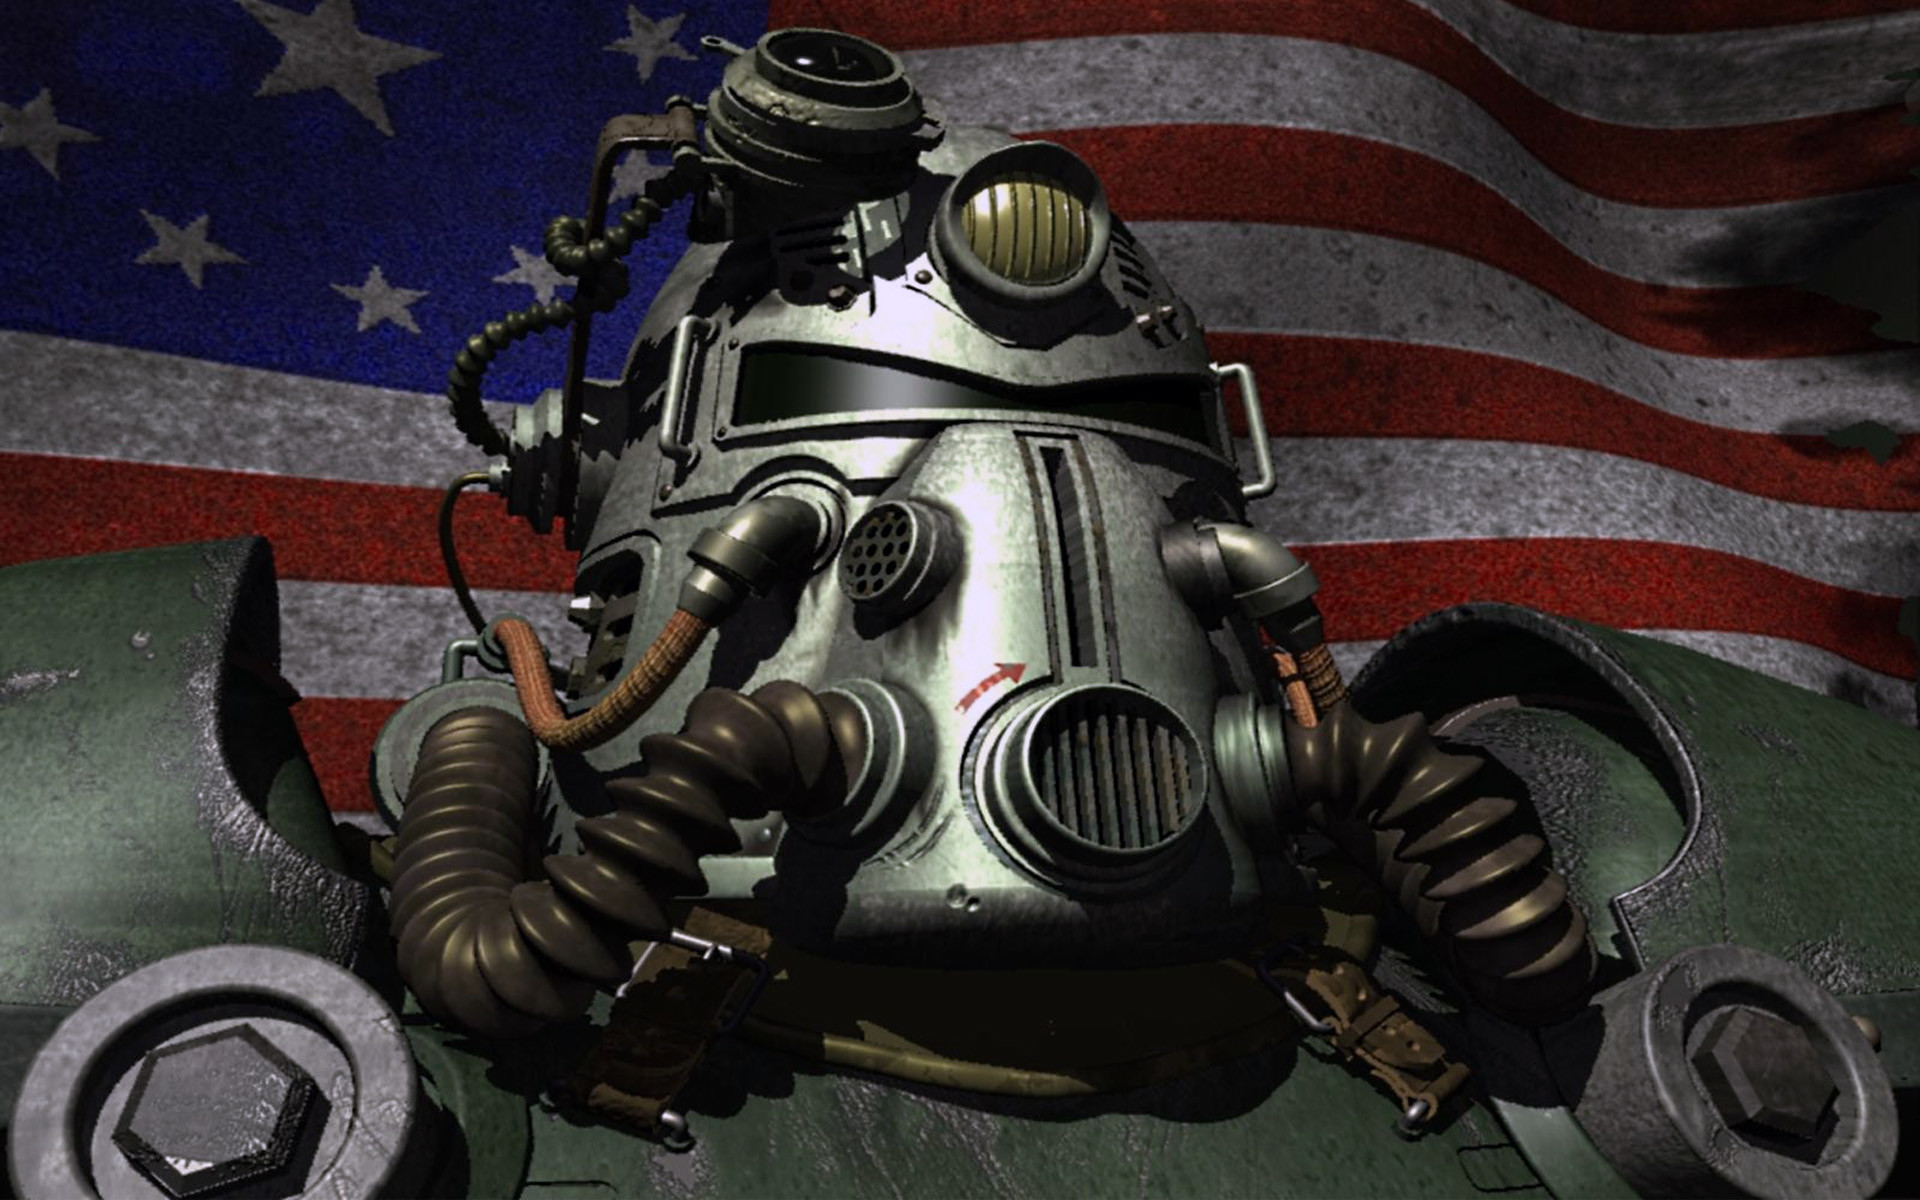 Fallout New Vegas Helmet Armor Wallpaper Fallout New